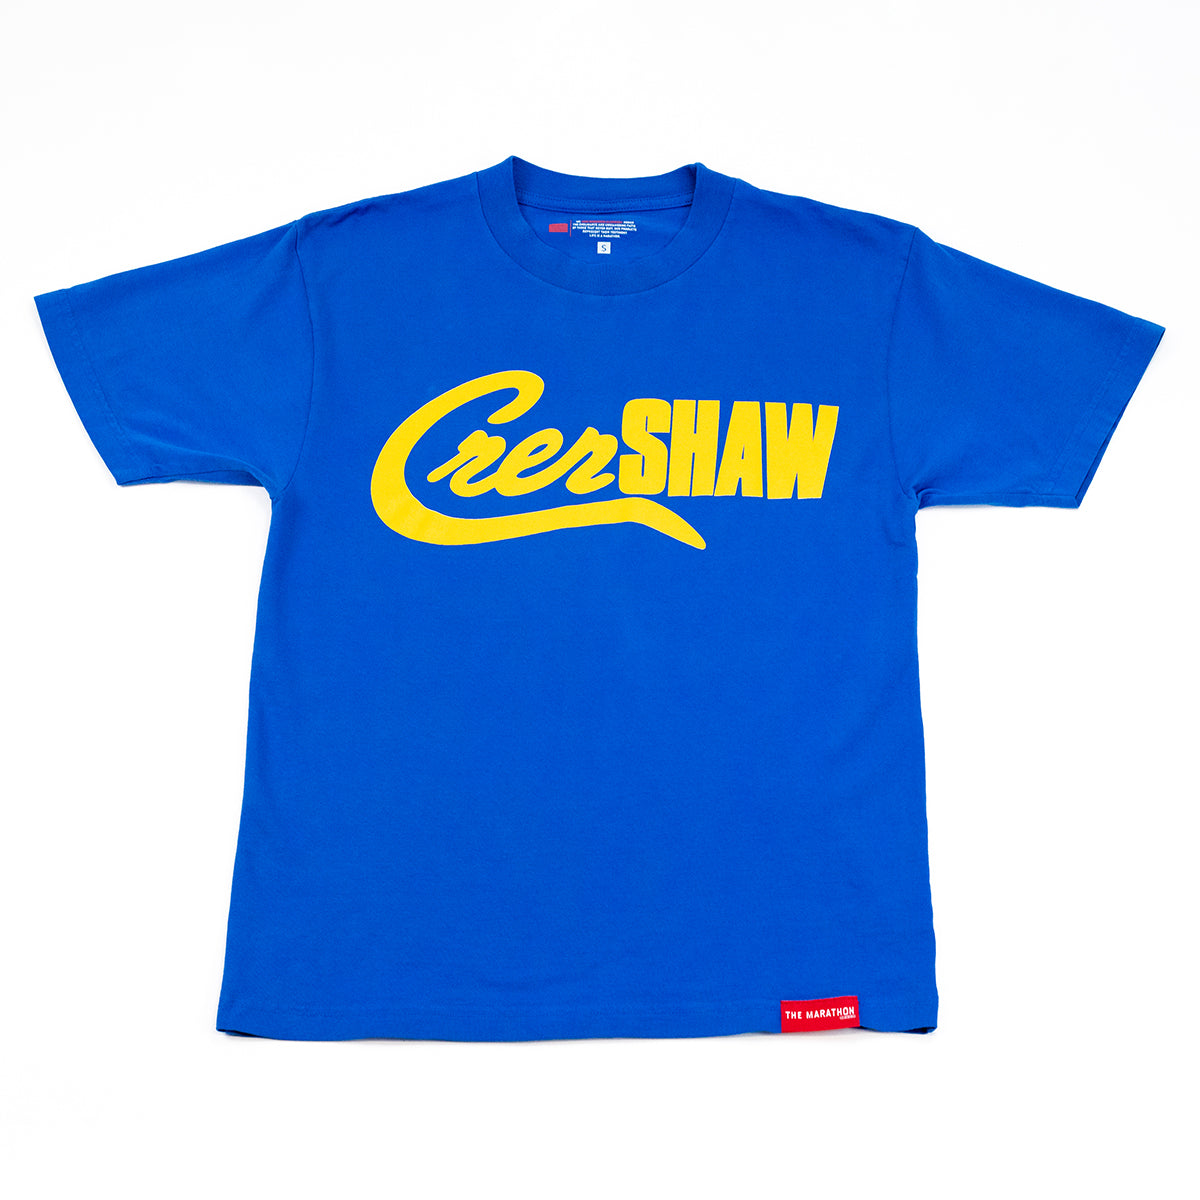 Crenshaw Mashup T-shirt - Royal/Gold